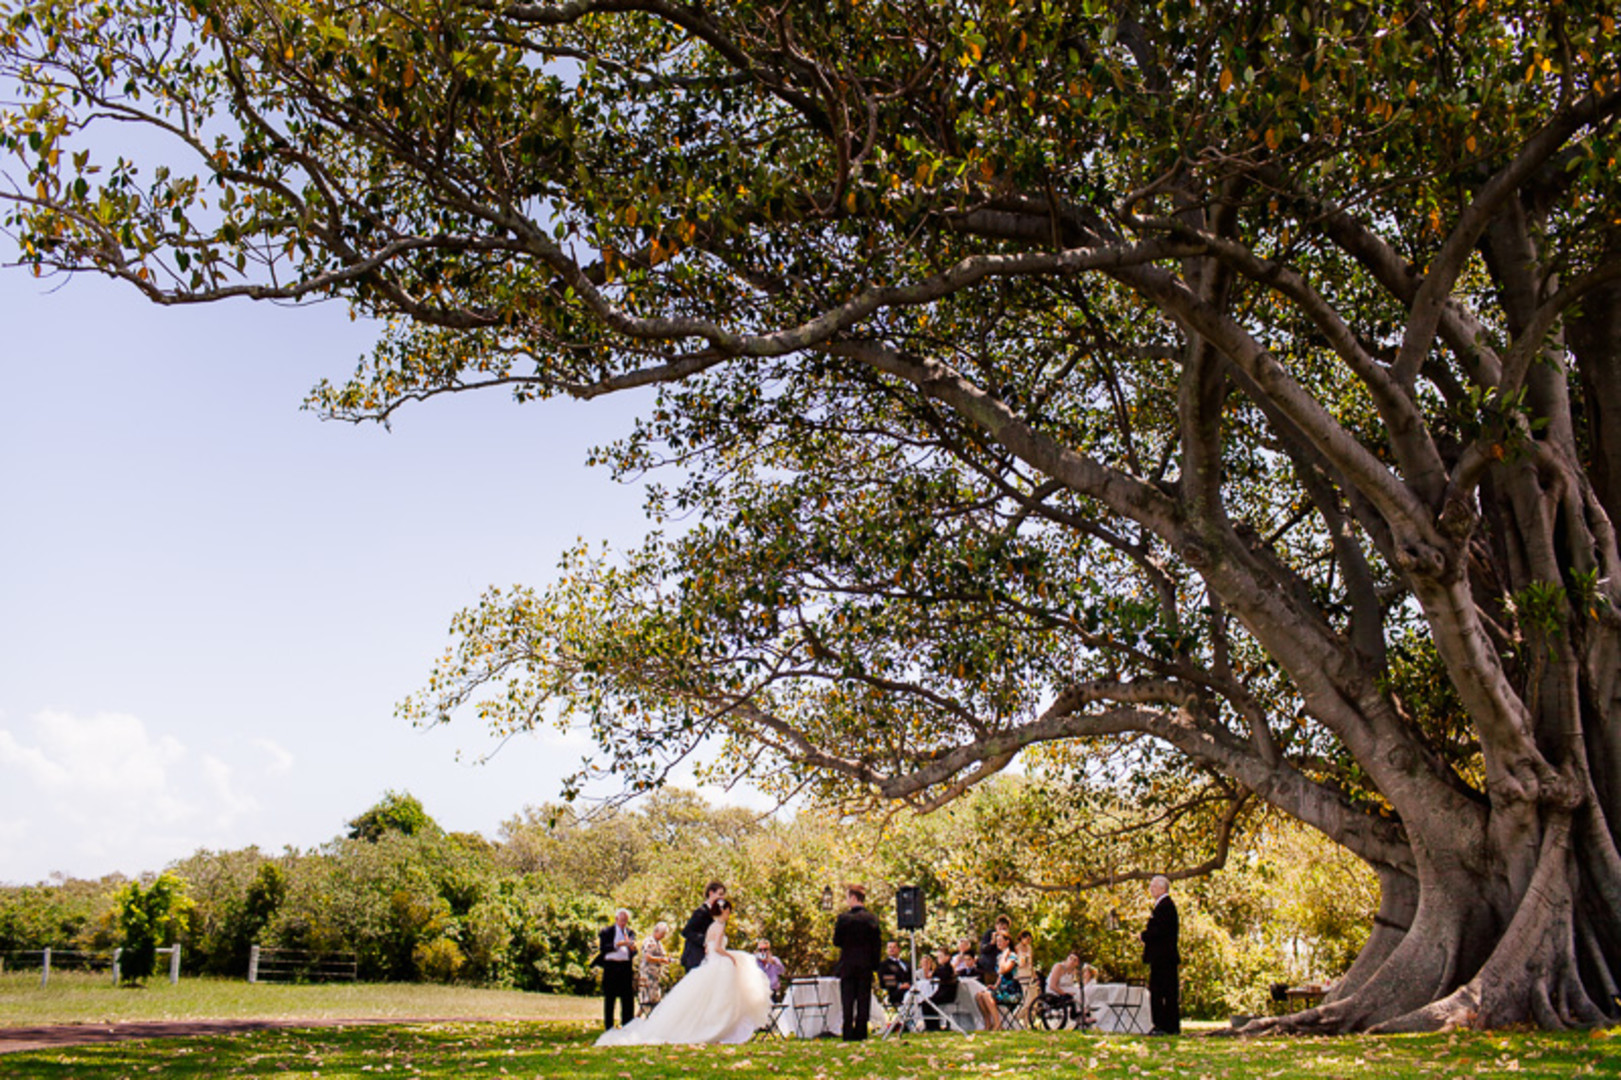 Vintage Style Outdoor Wedding Under Tree